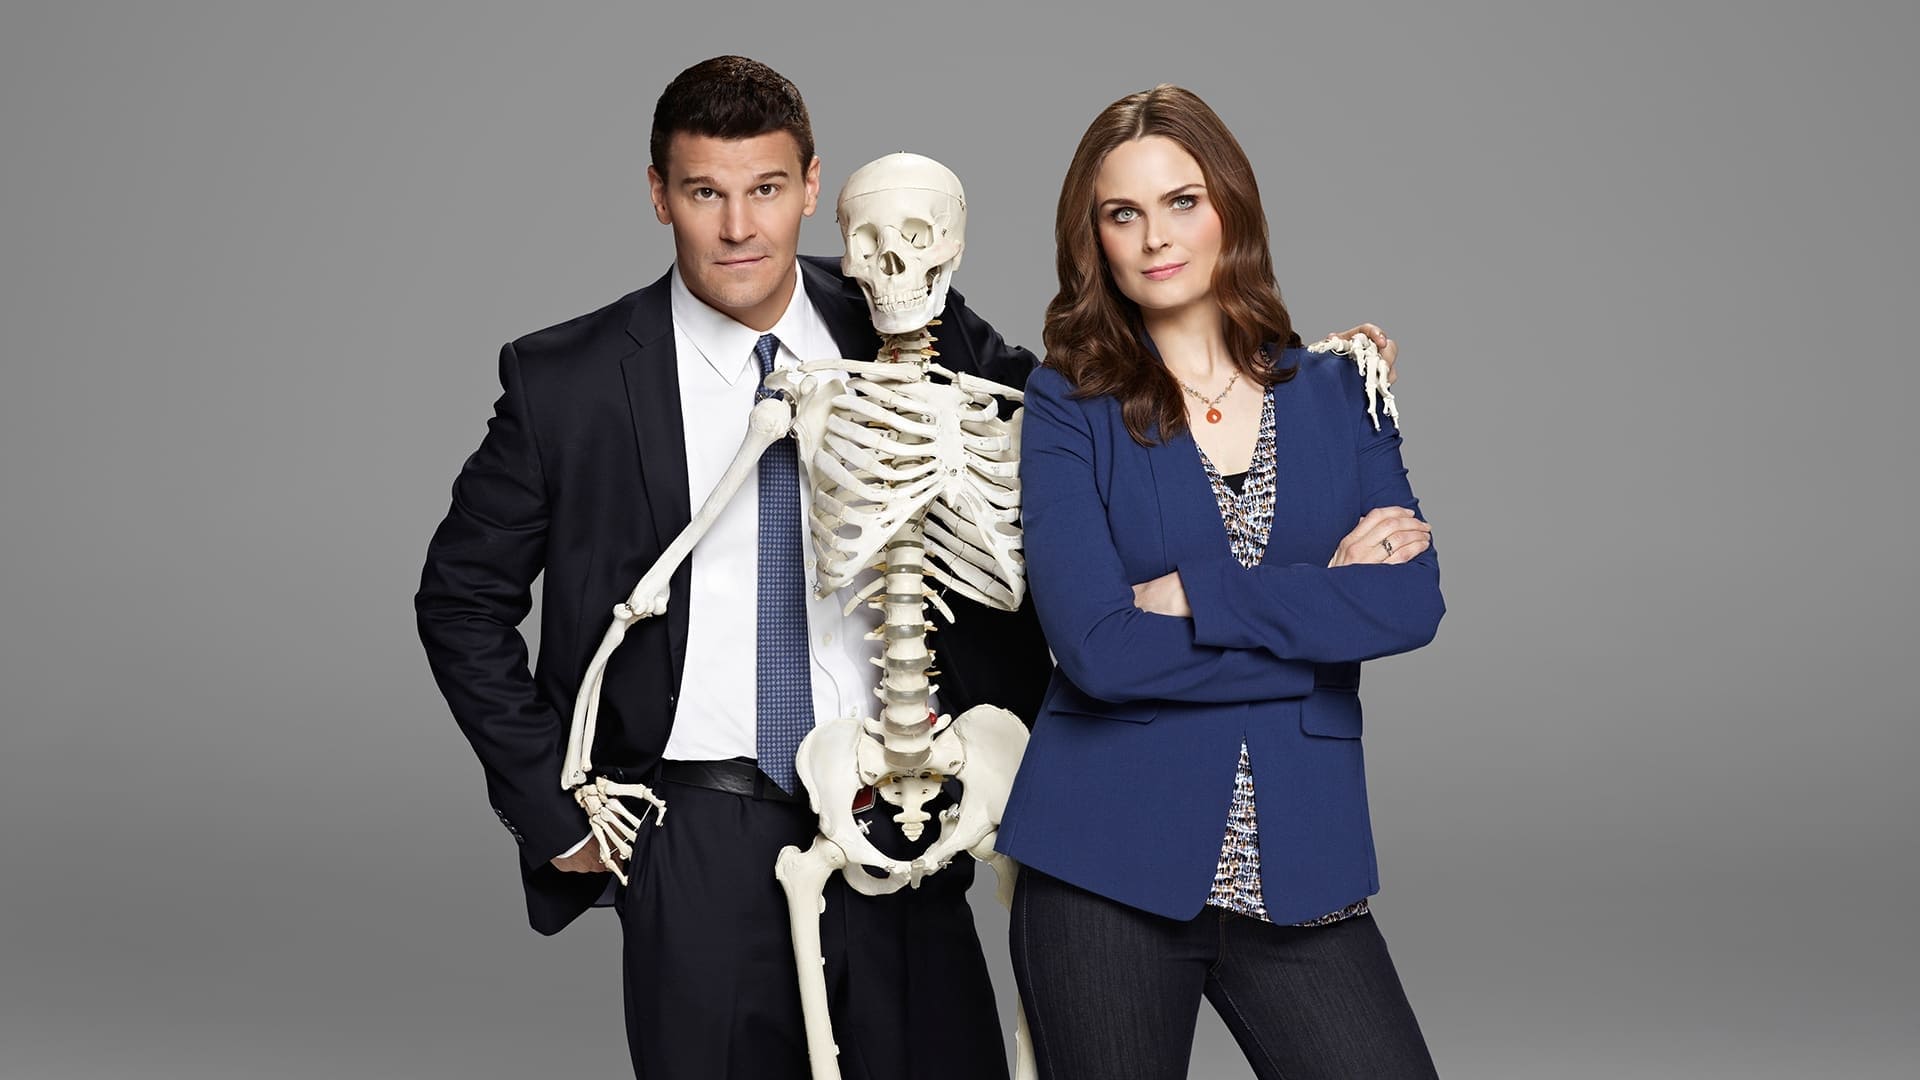 Bones - Season 12 Episode 12